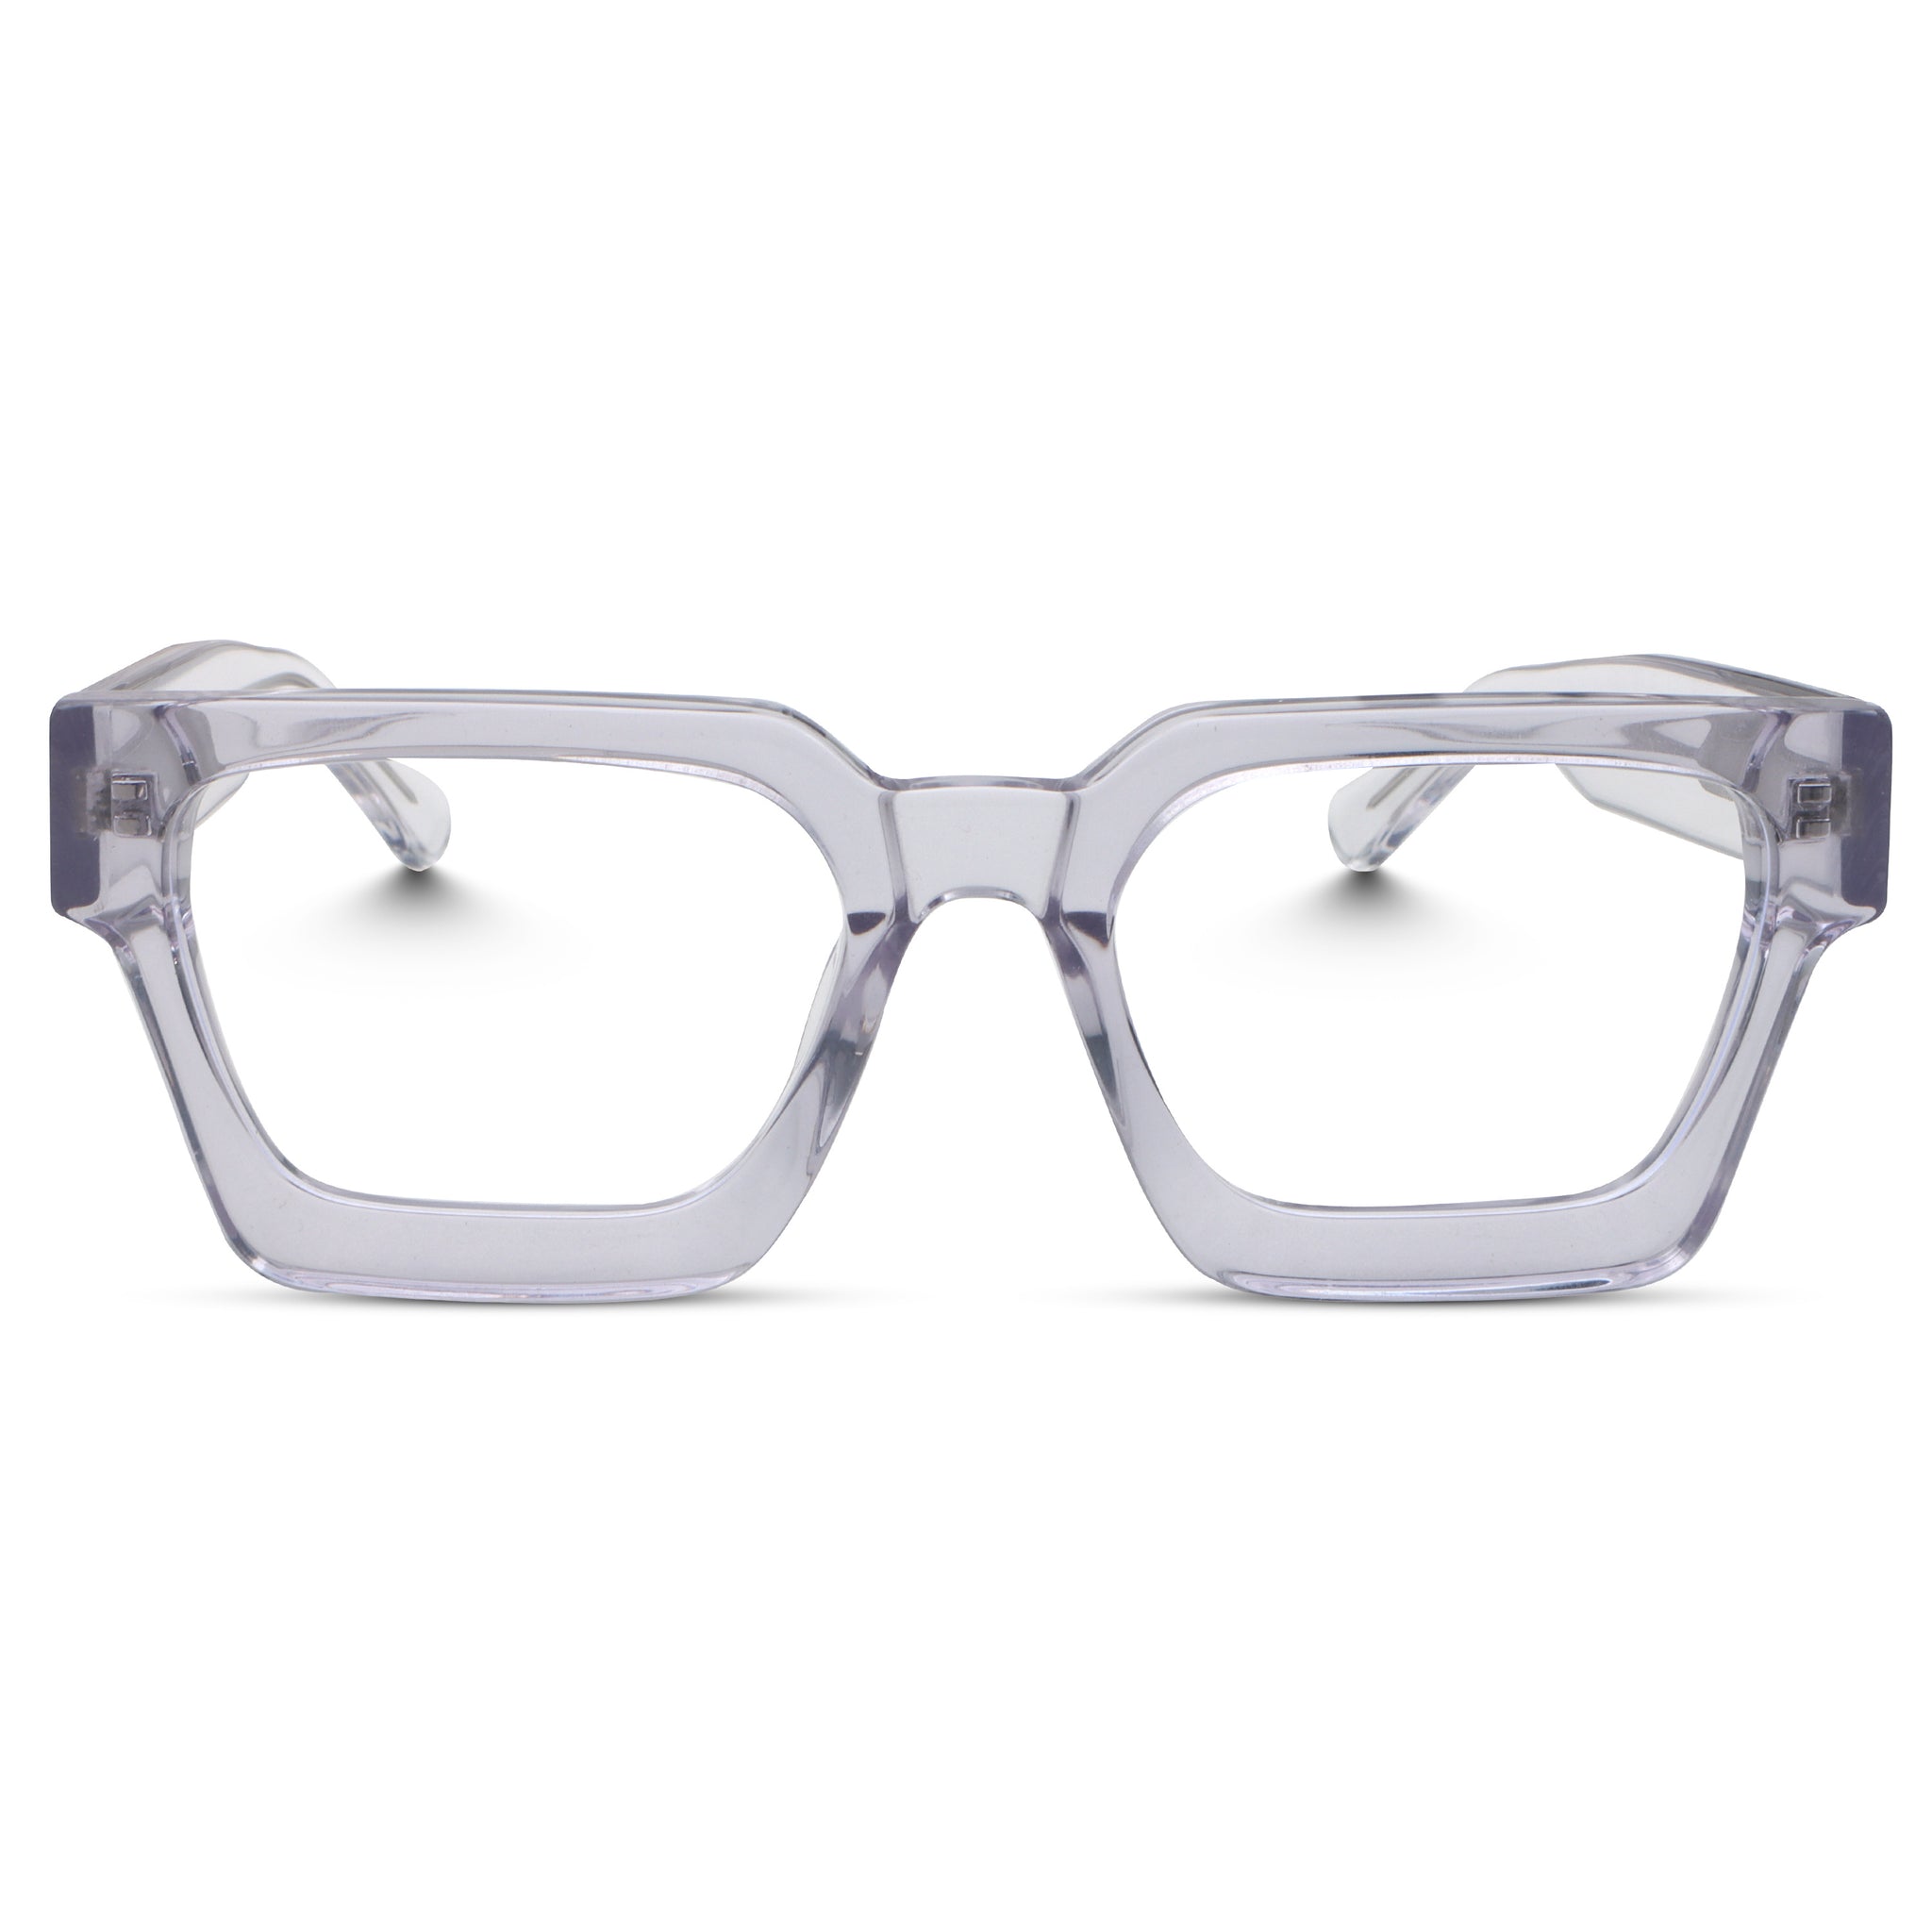 Unique Design Square Prescription Eyeglasses Clear Frame